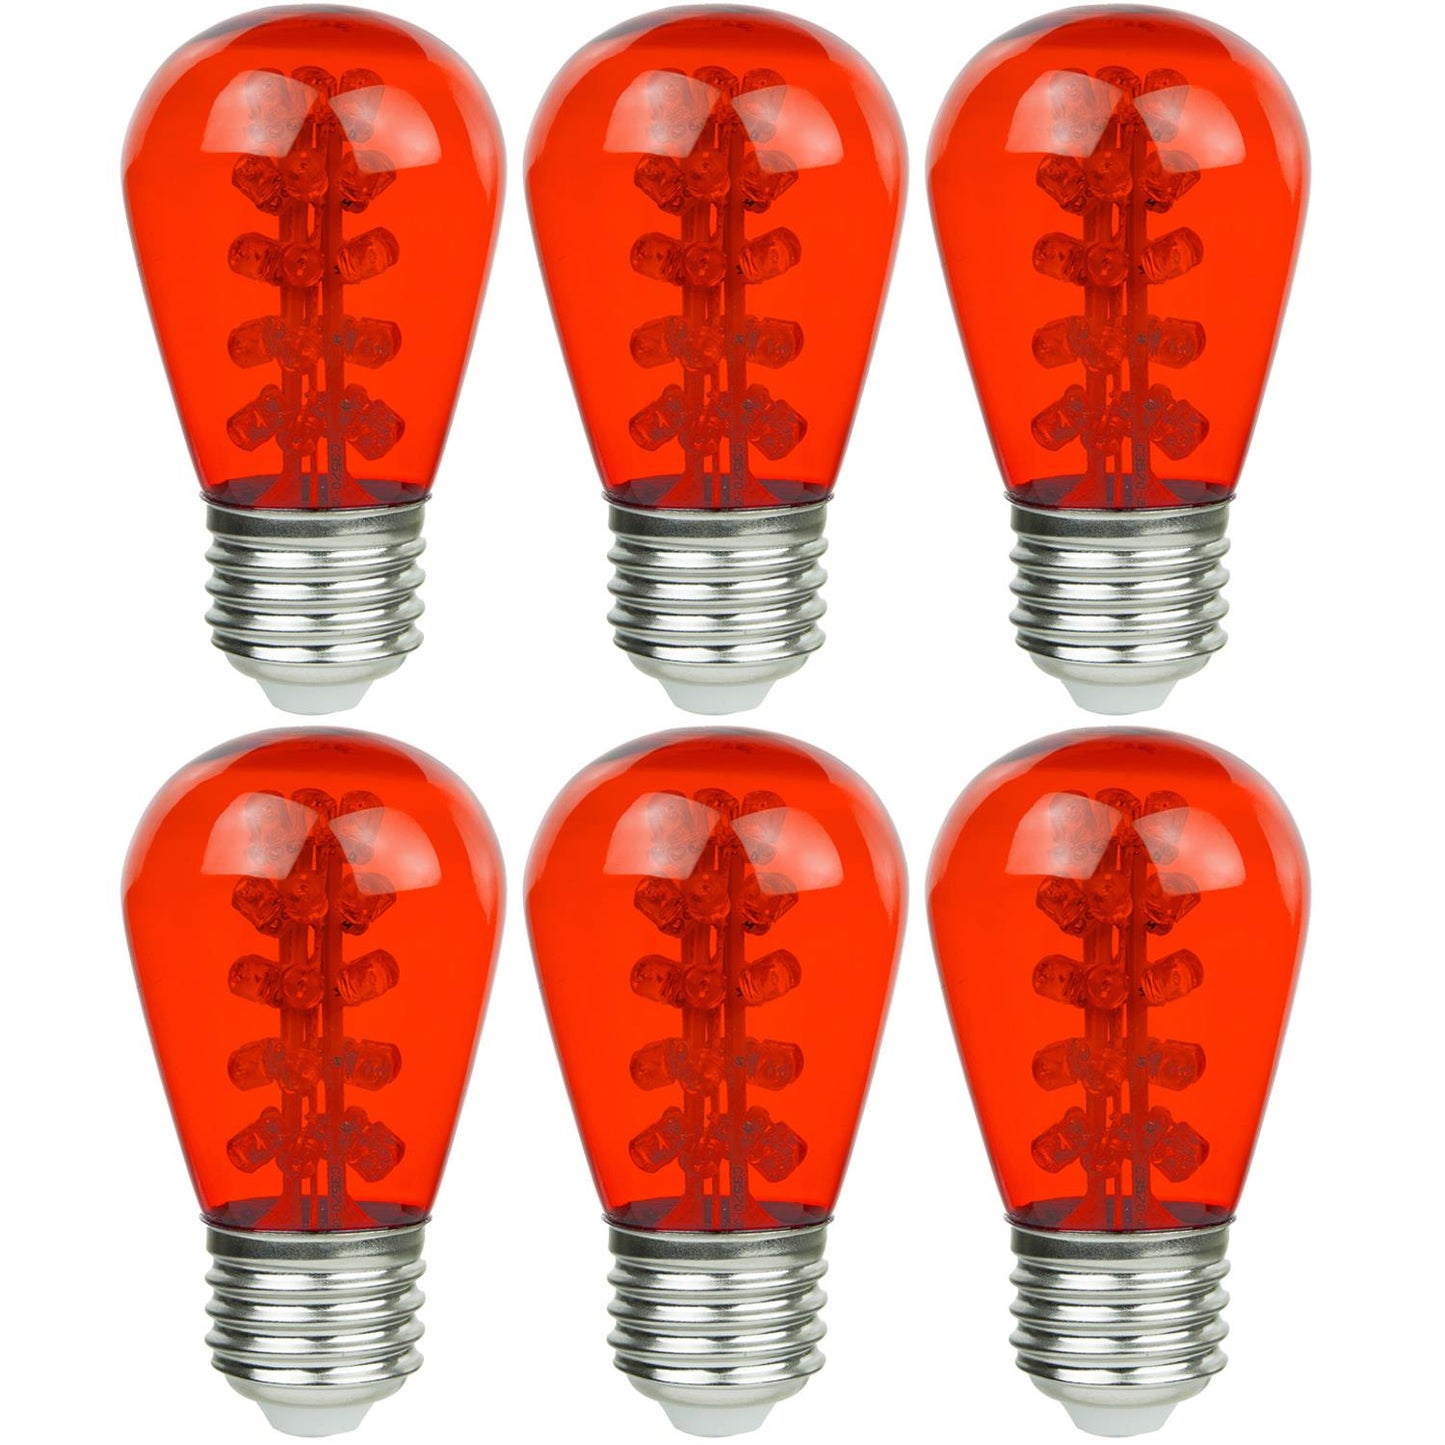 Sunlite LED S14 Colored Sign 0.9W (10W Equivalent) Bulb Medium (E26) Base, Red